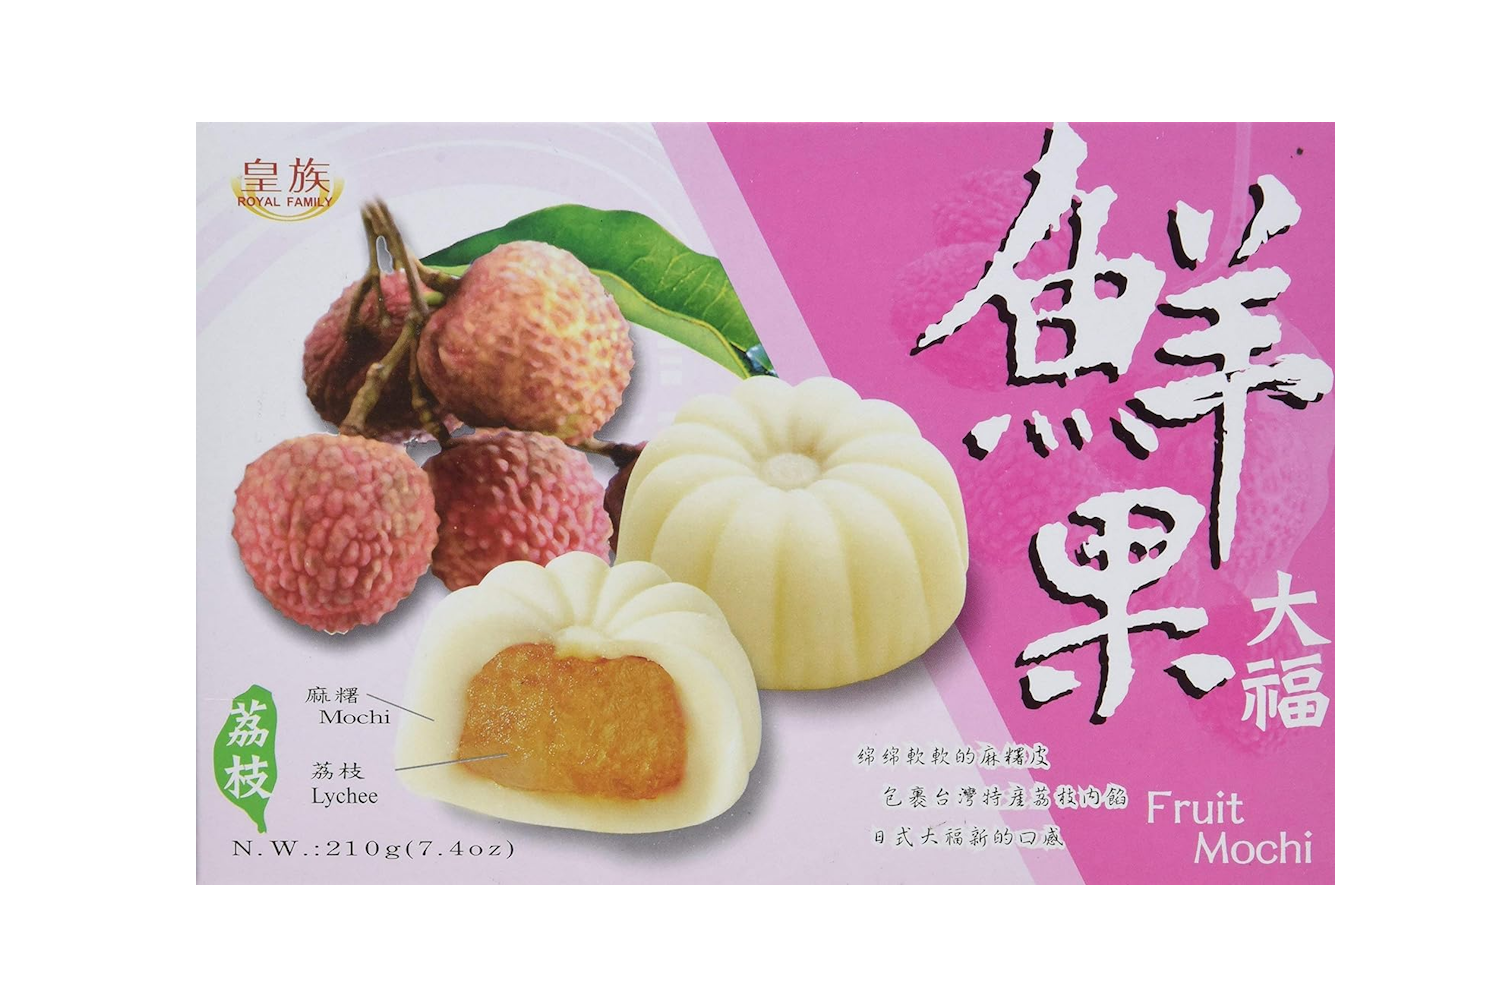 Royal Family - Fruit Mochi Lychee Flavor 210g